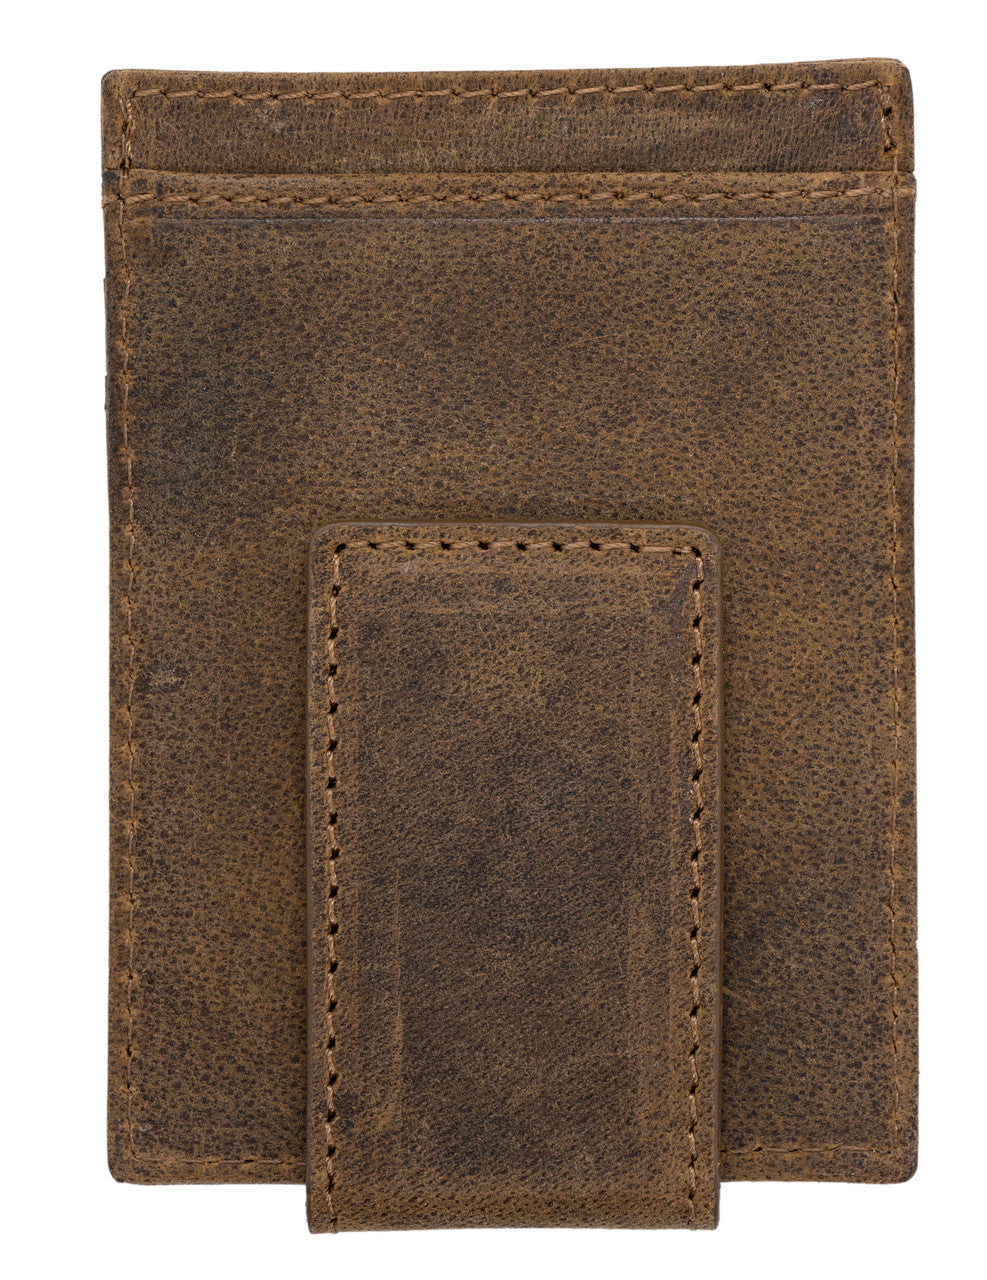 John Deere Genuine Leather Magnetic Money Clip - Brown - 4105000-200